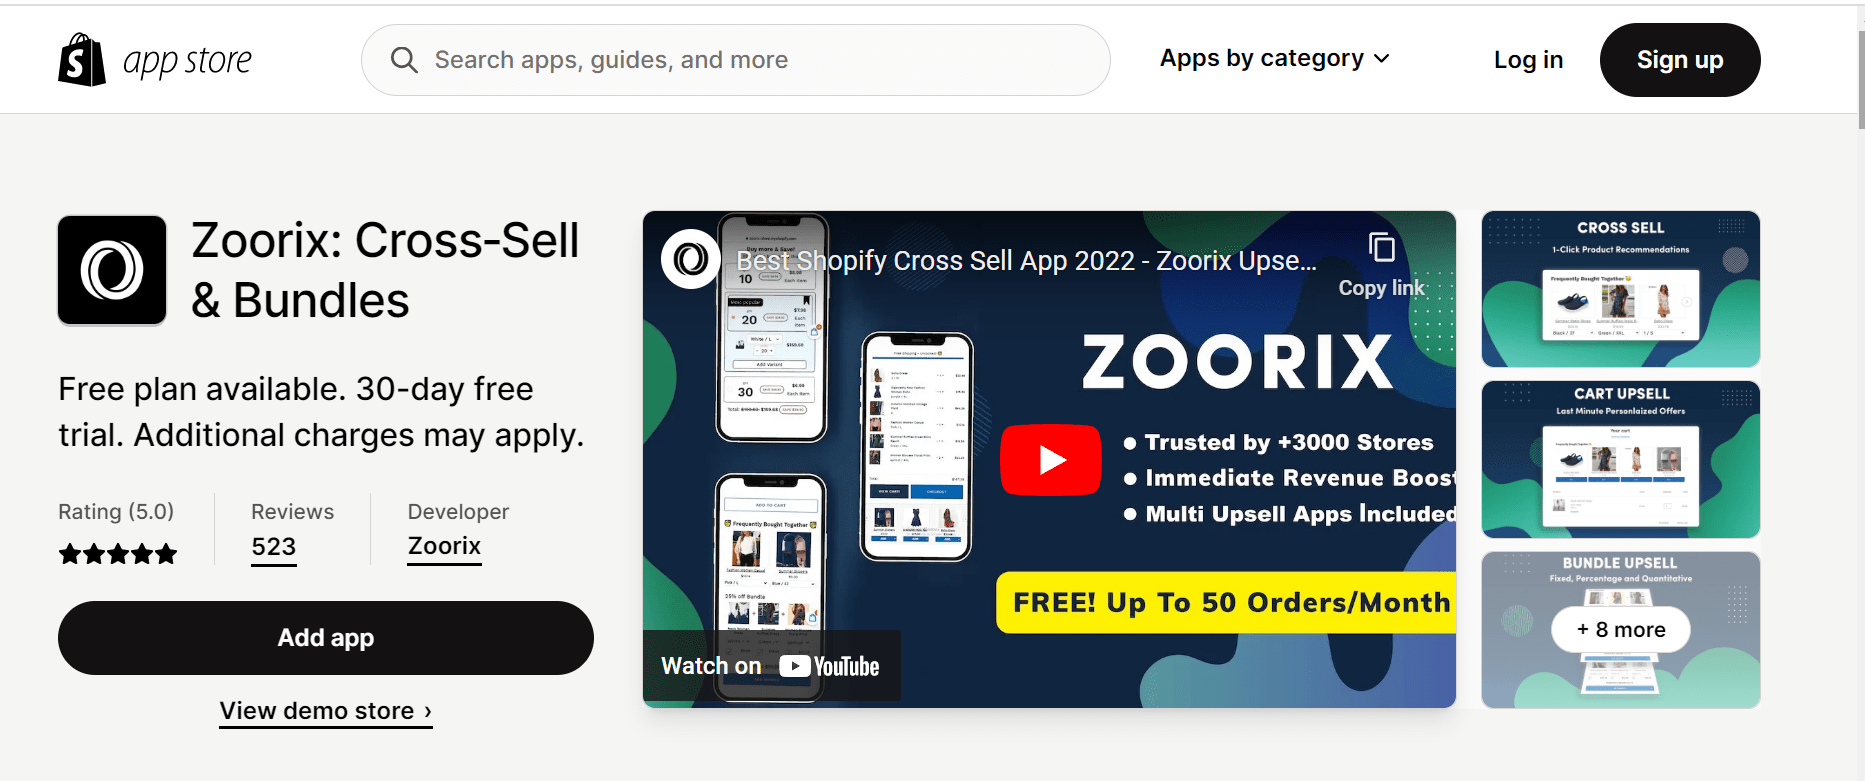 Zoorix Product Recommendation